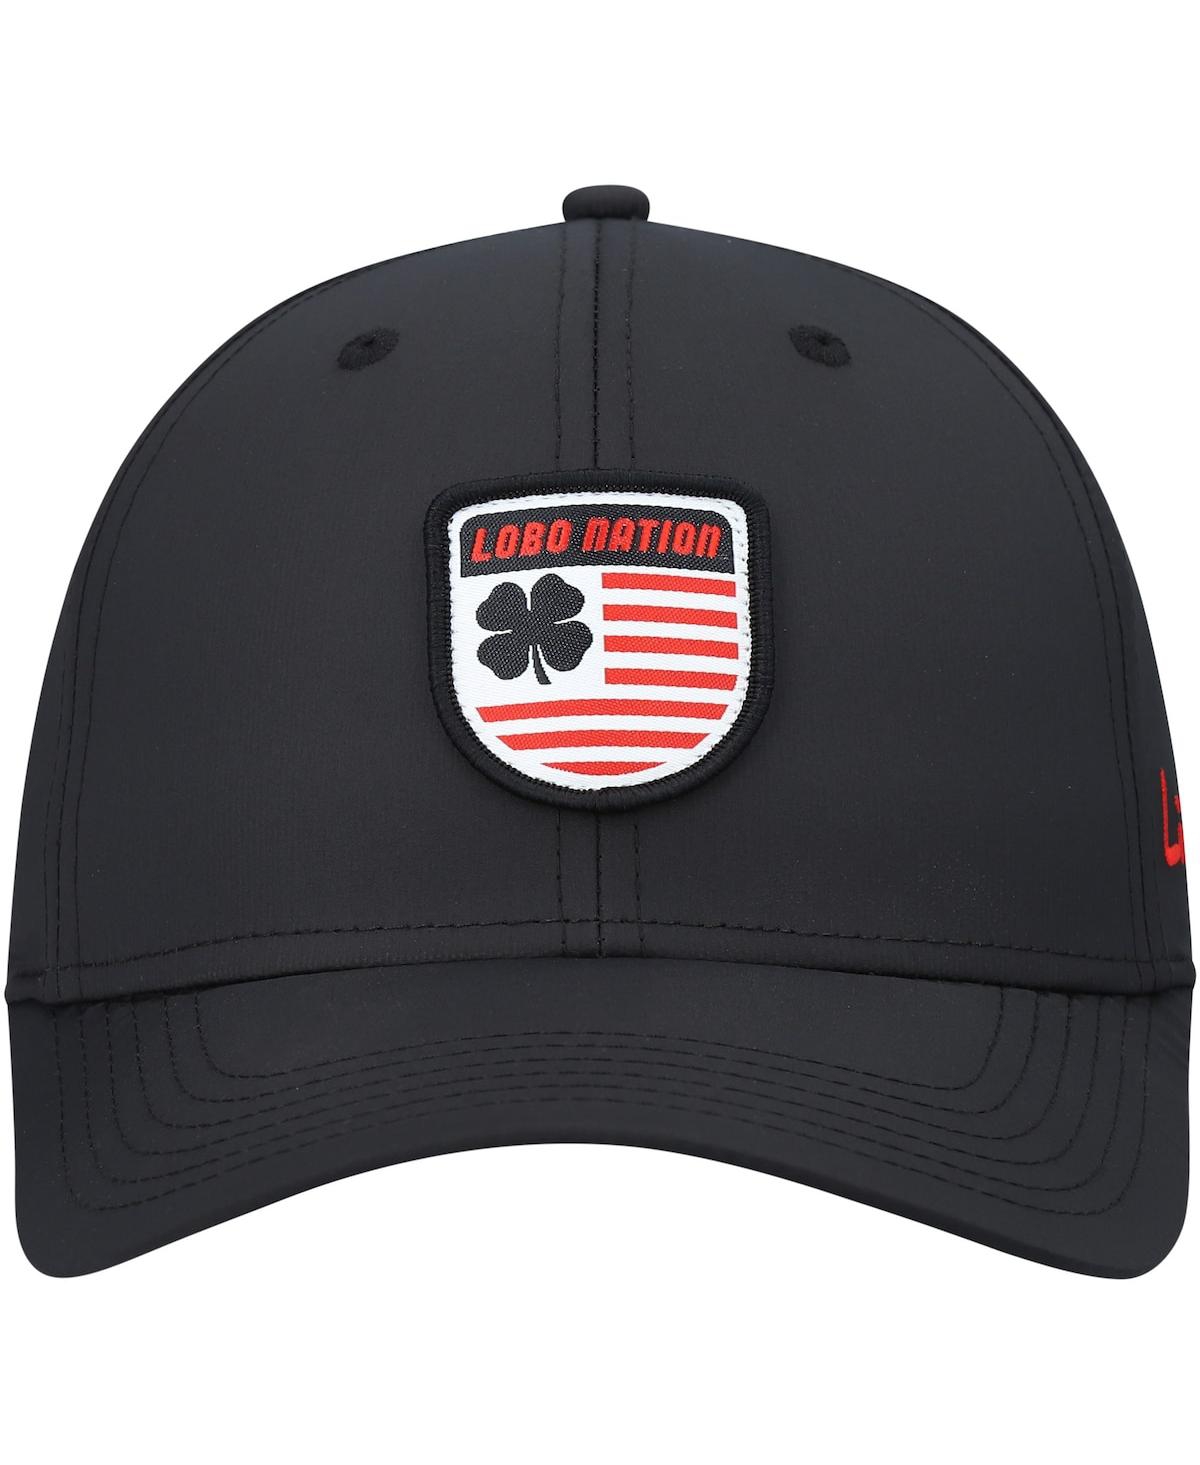 Shop Black Clover Men's Black New Mexico Lobos Nation Shield Snapback Hat